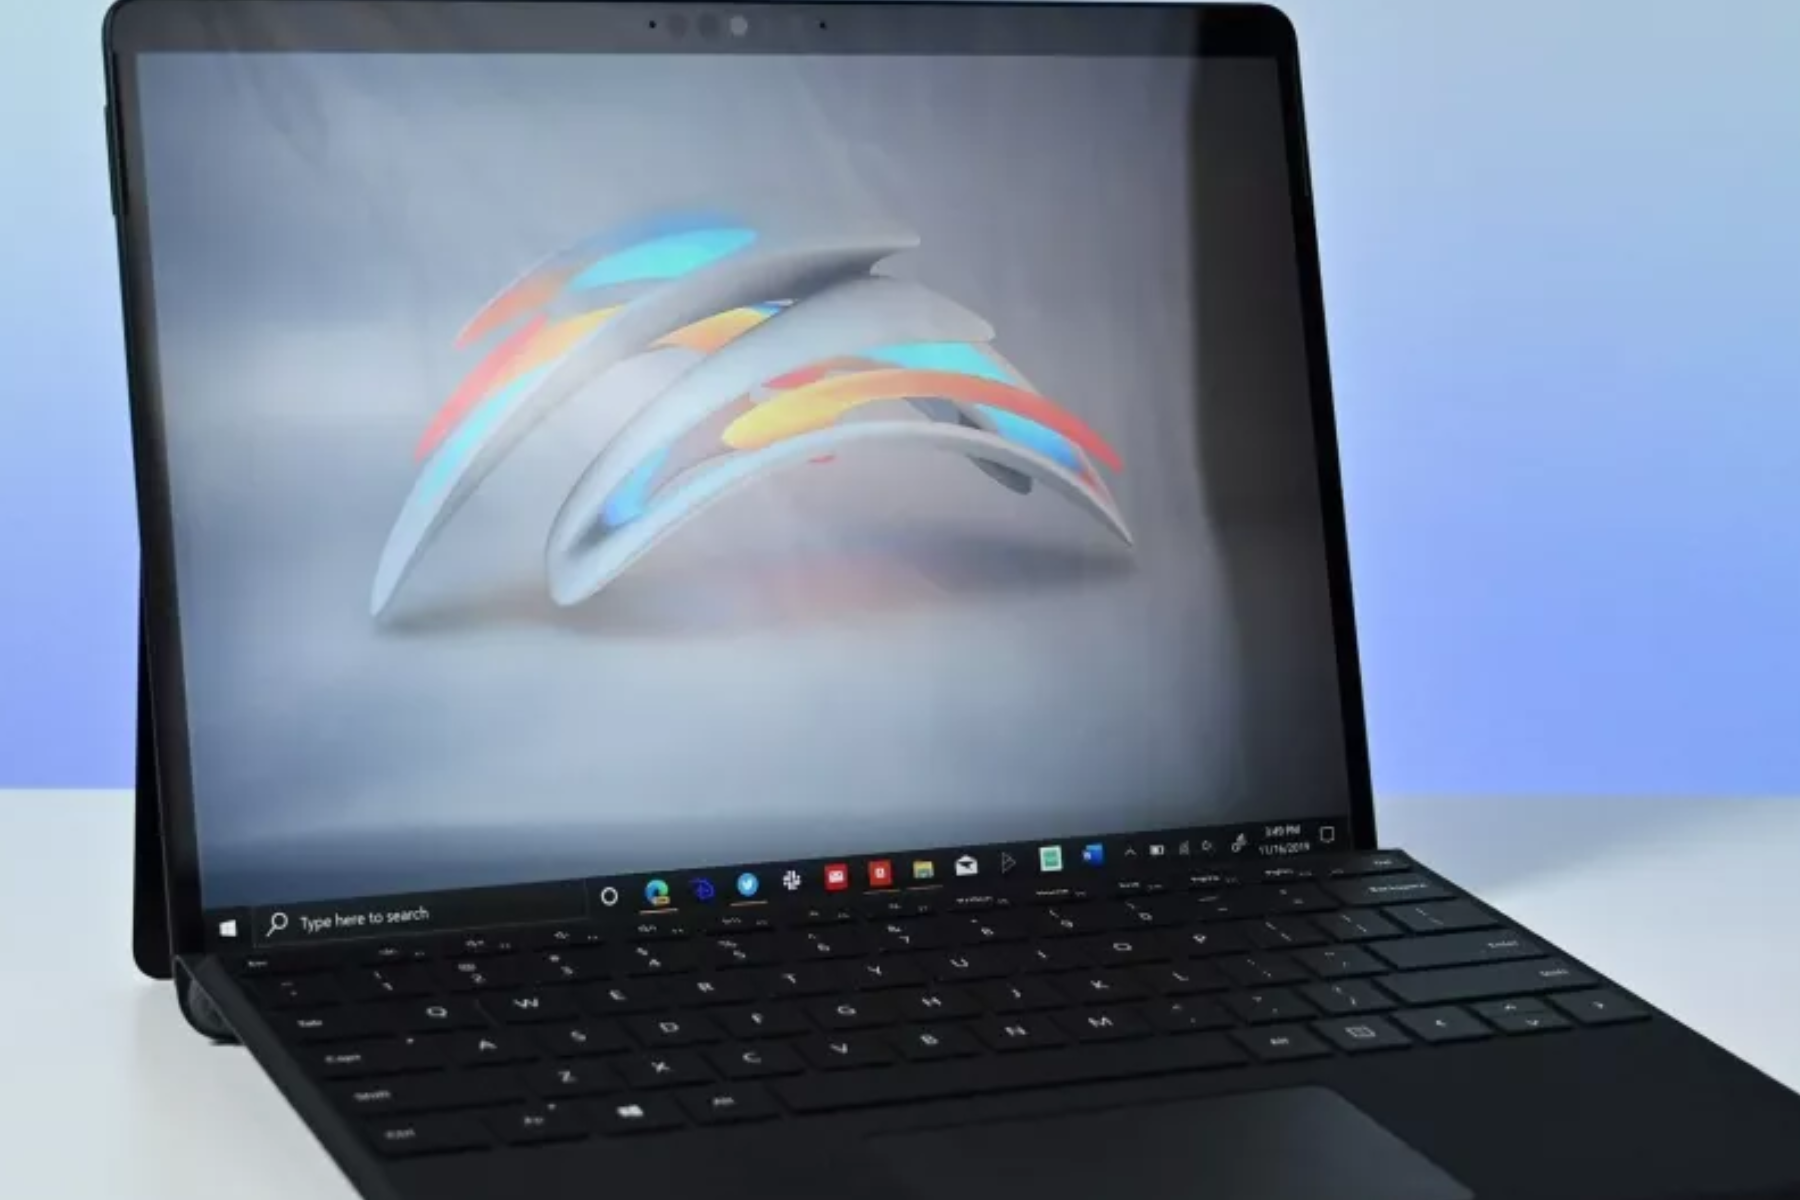 A black laptop with a futuristic wallpaper